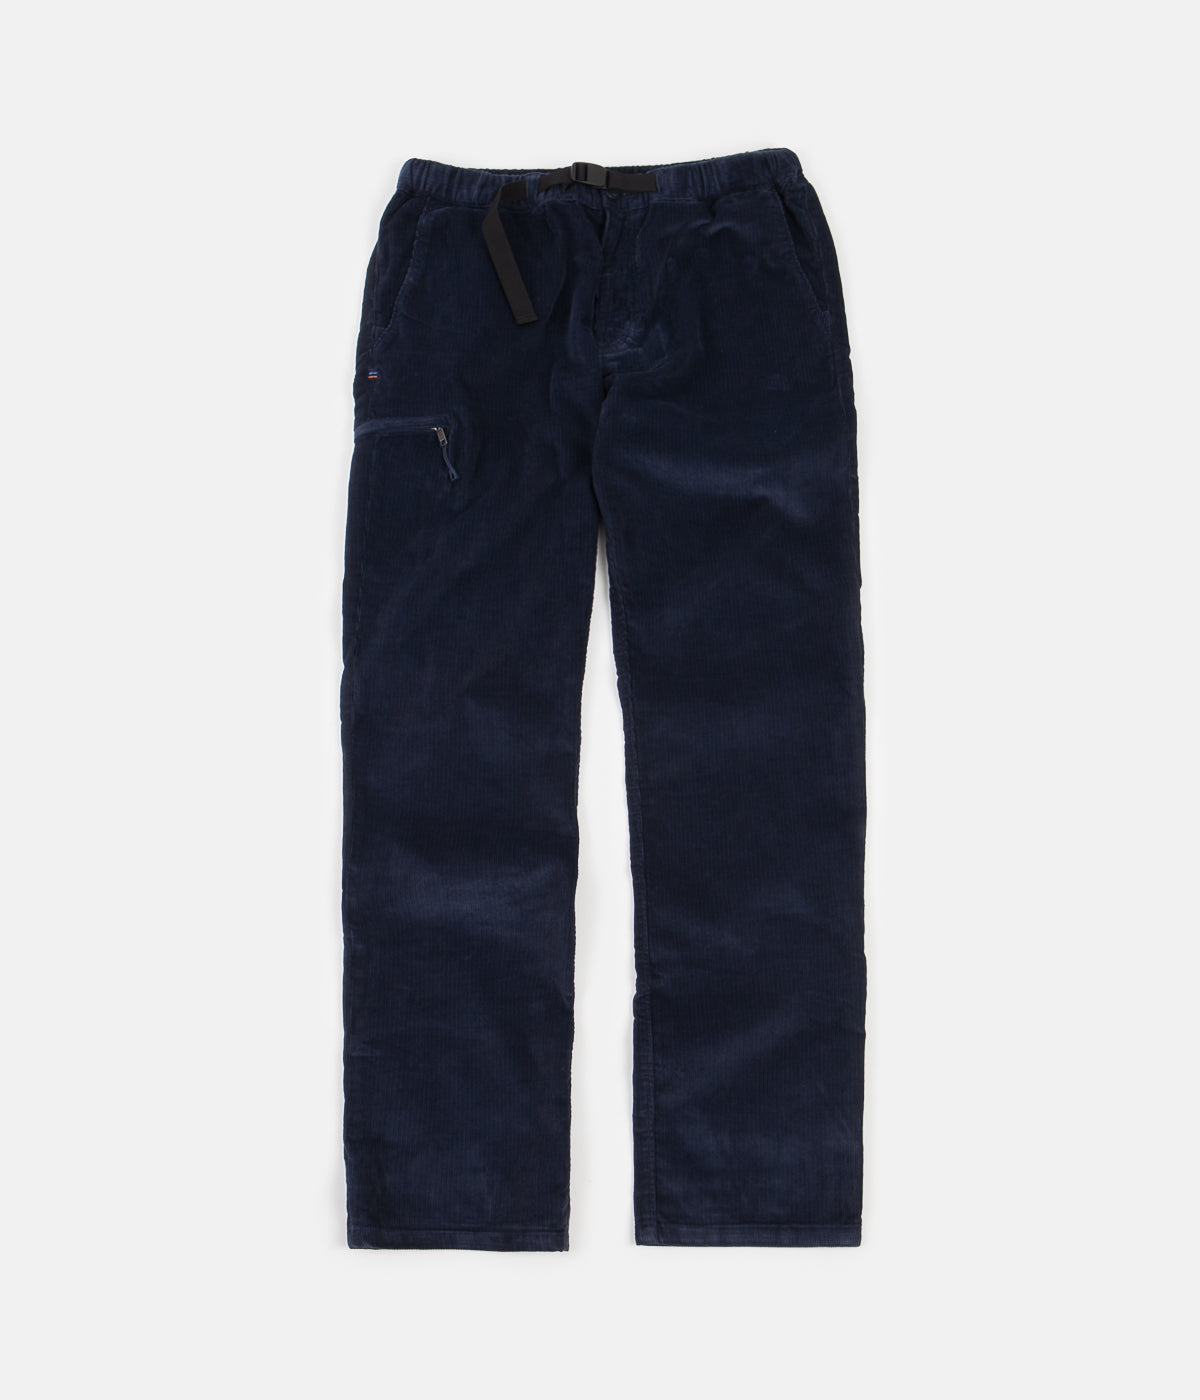 Buy PROYOG Organic Cotton Color Blocked Pants (M, Navy) at